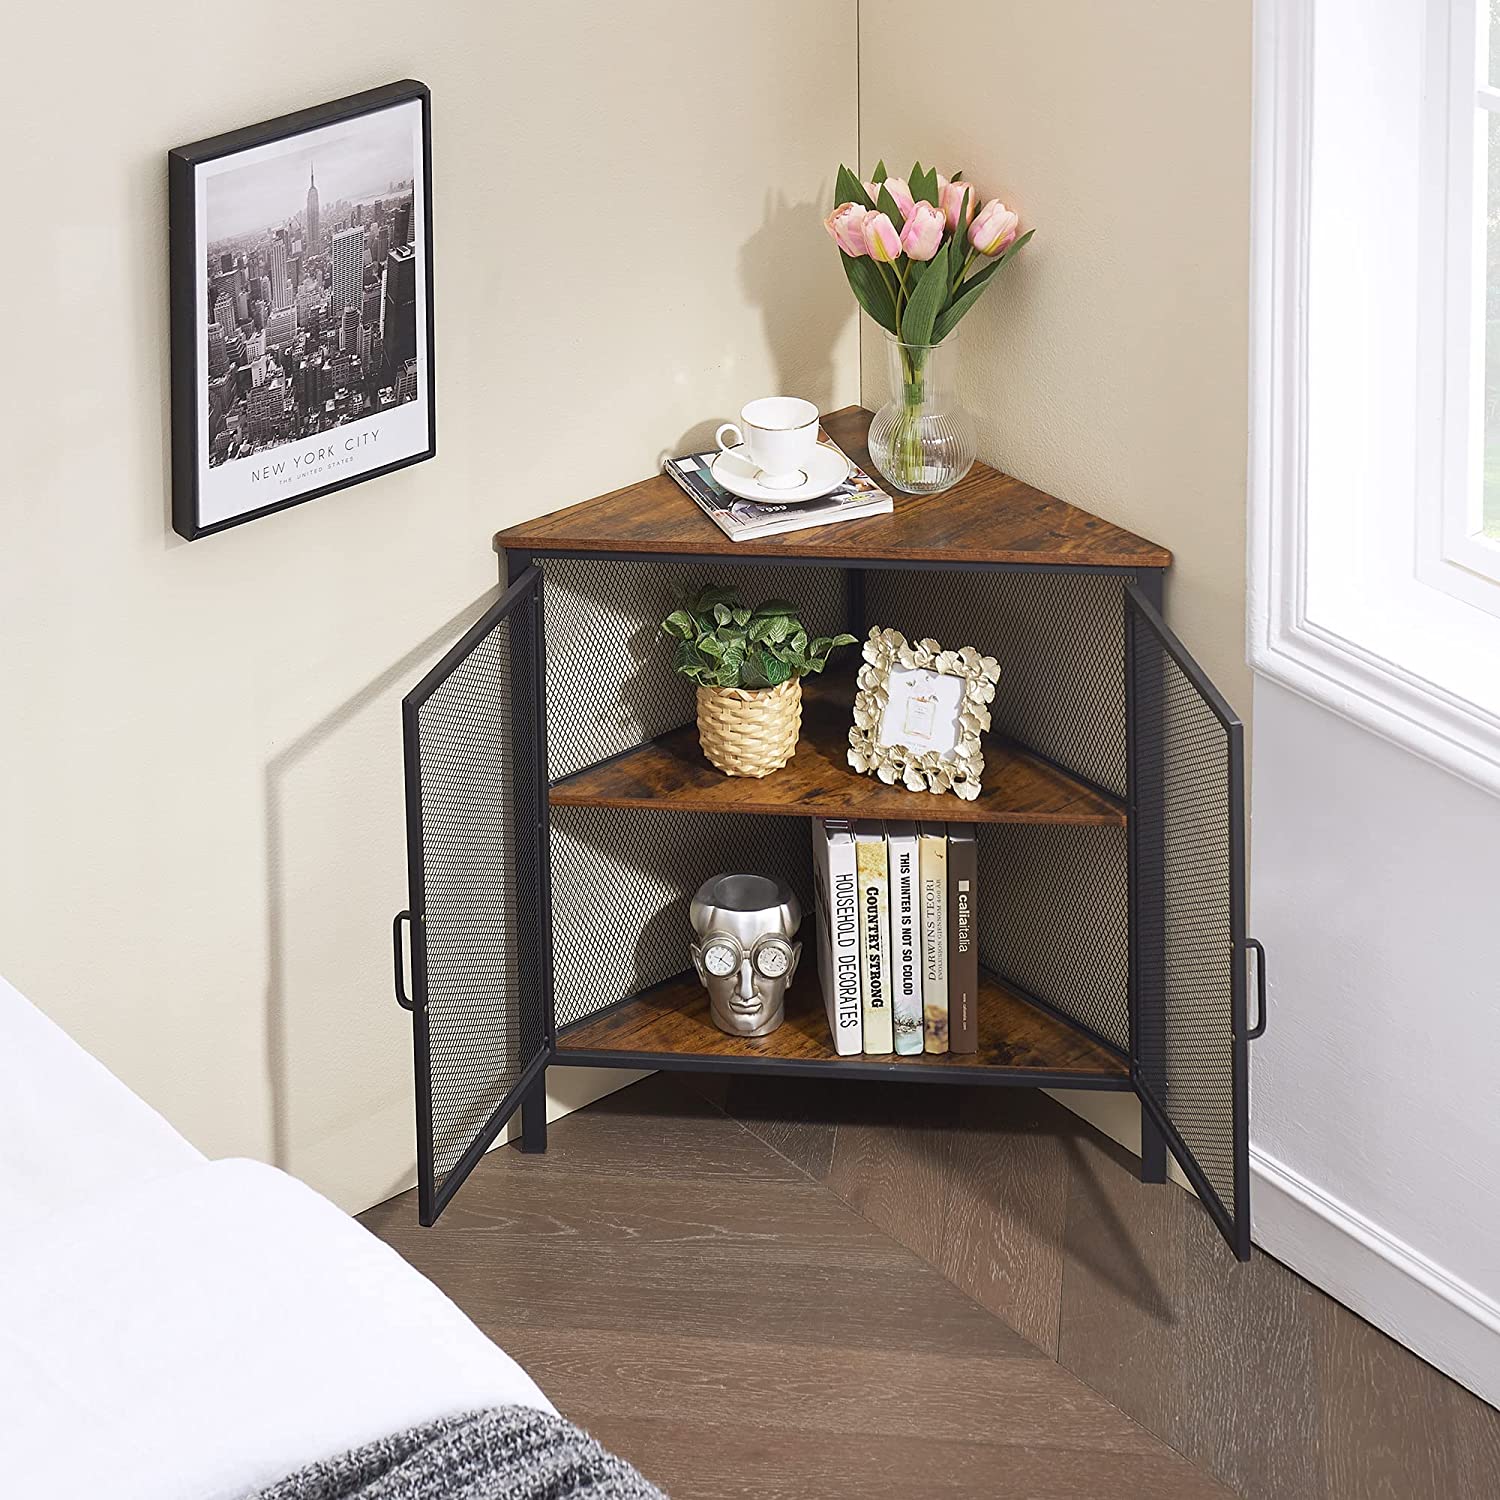  Corner End Table/Shelf 3-Tier Display Shelves